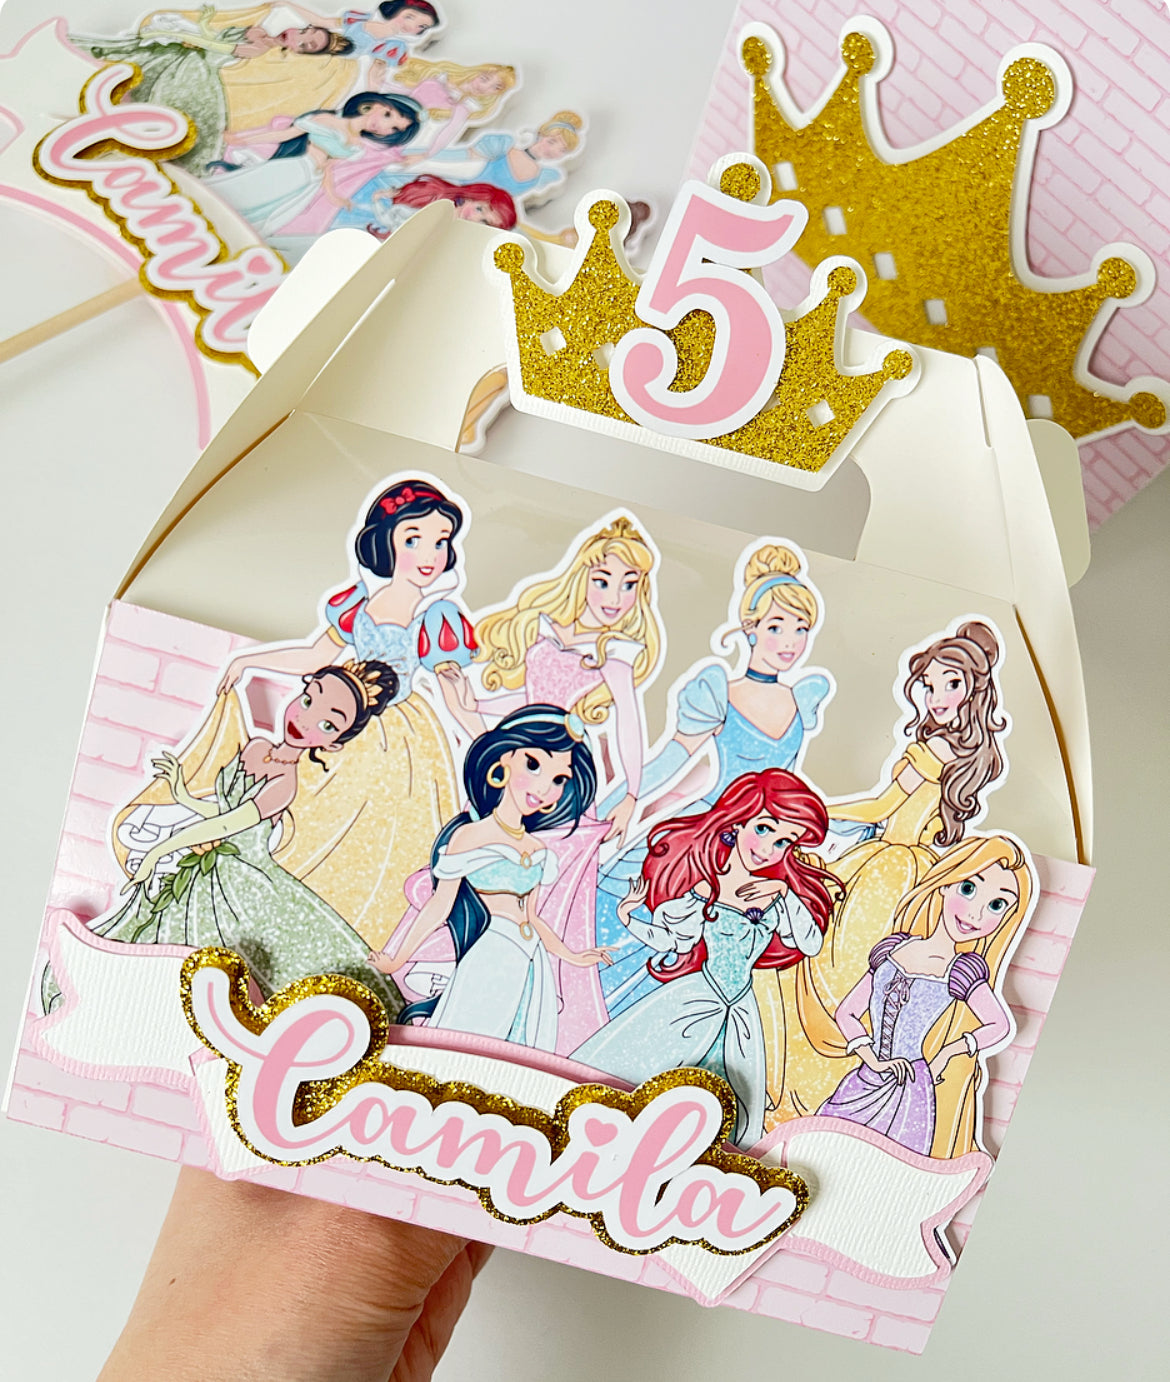 Disney Princess themed Party Decorations